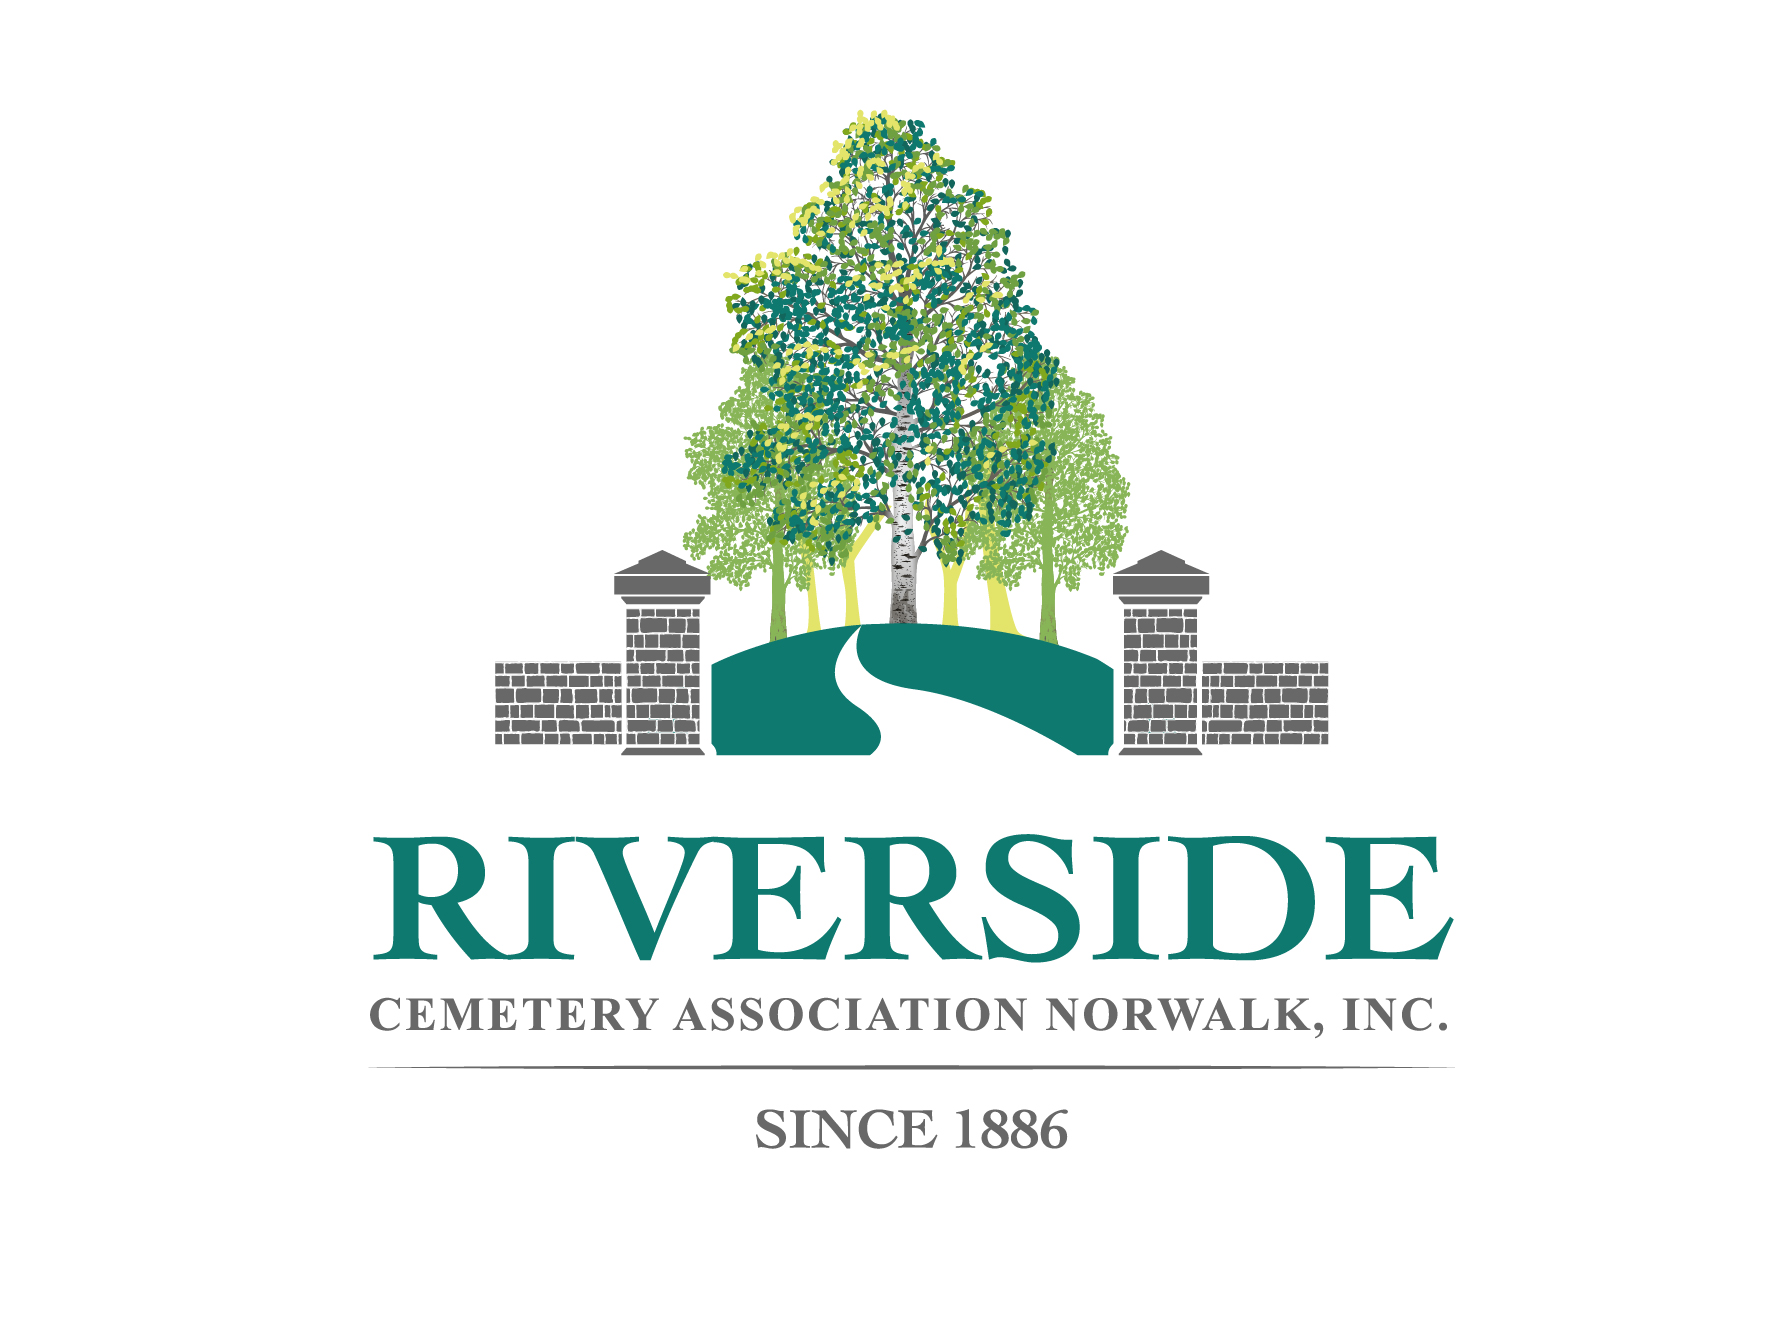 Riverside Cemetery Association Norwalk, Inc.